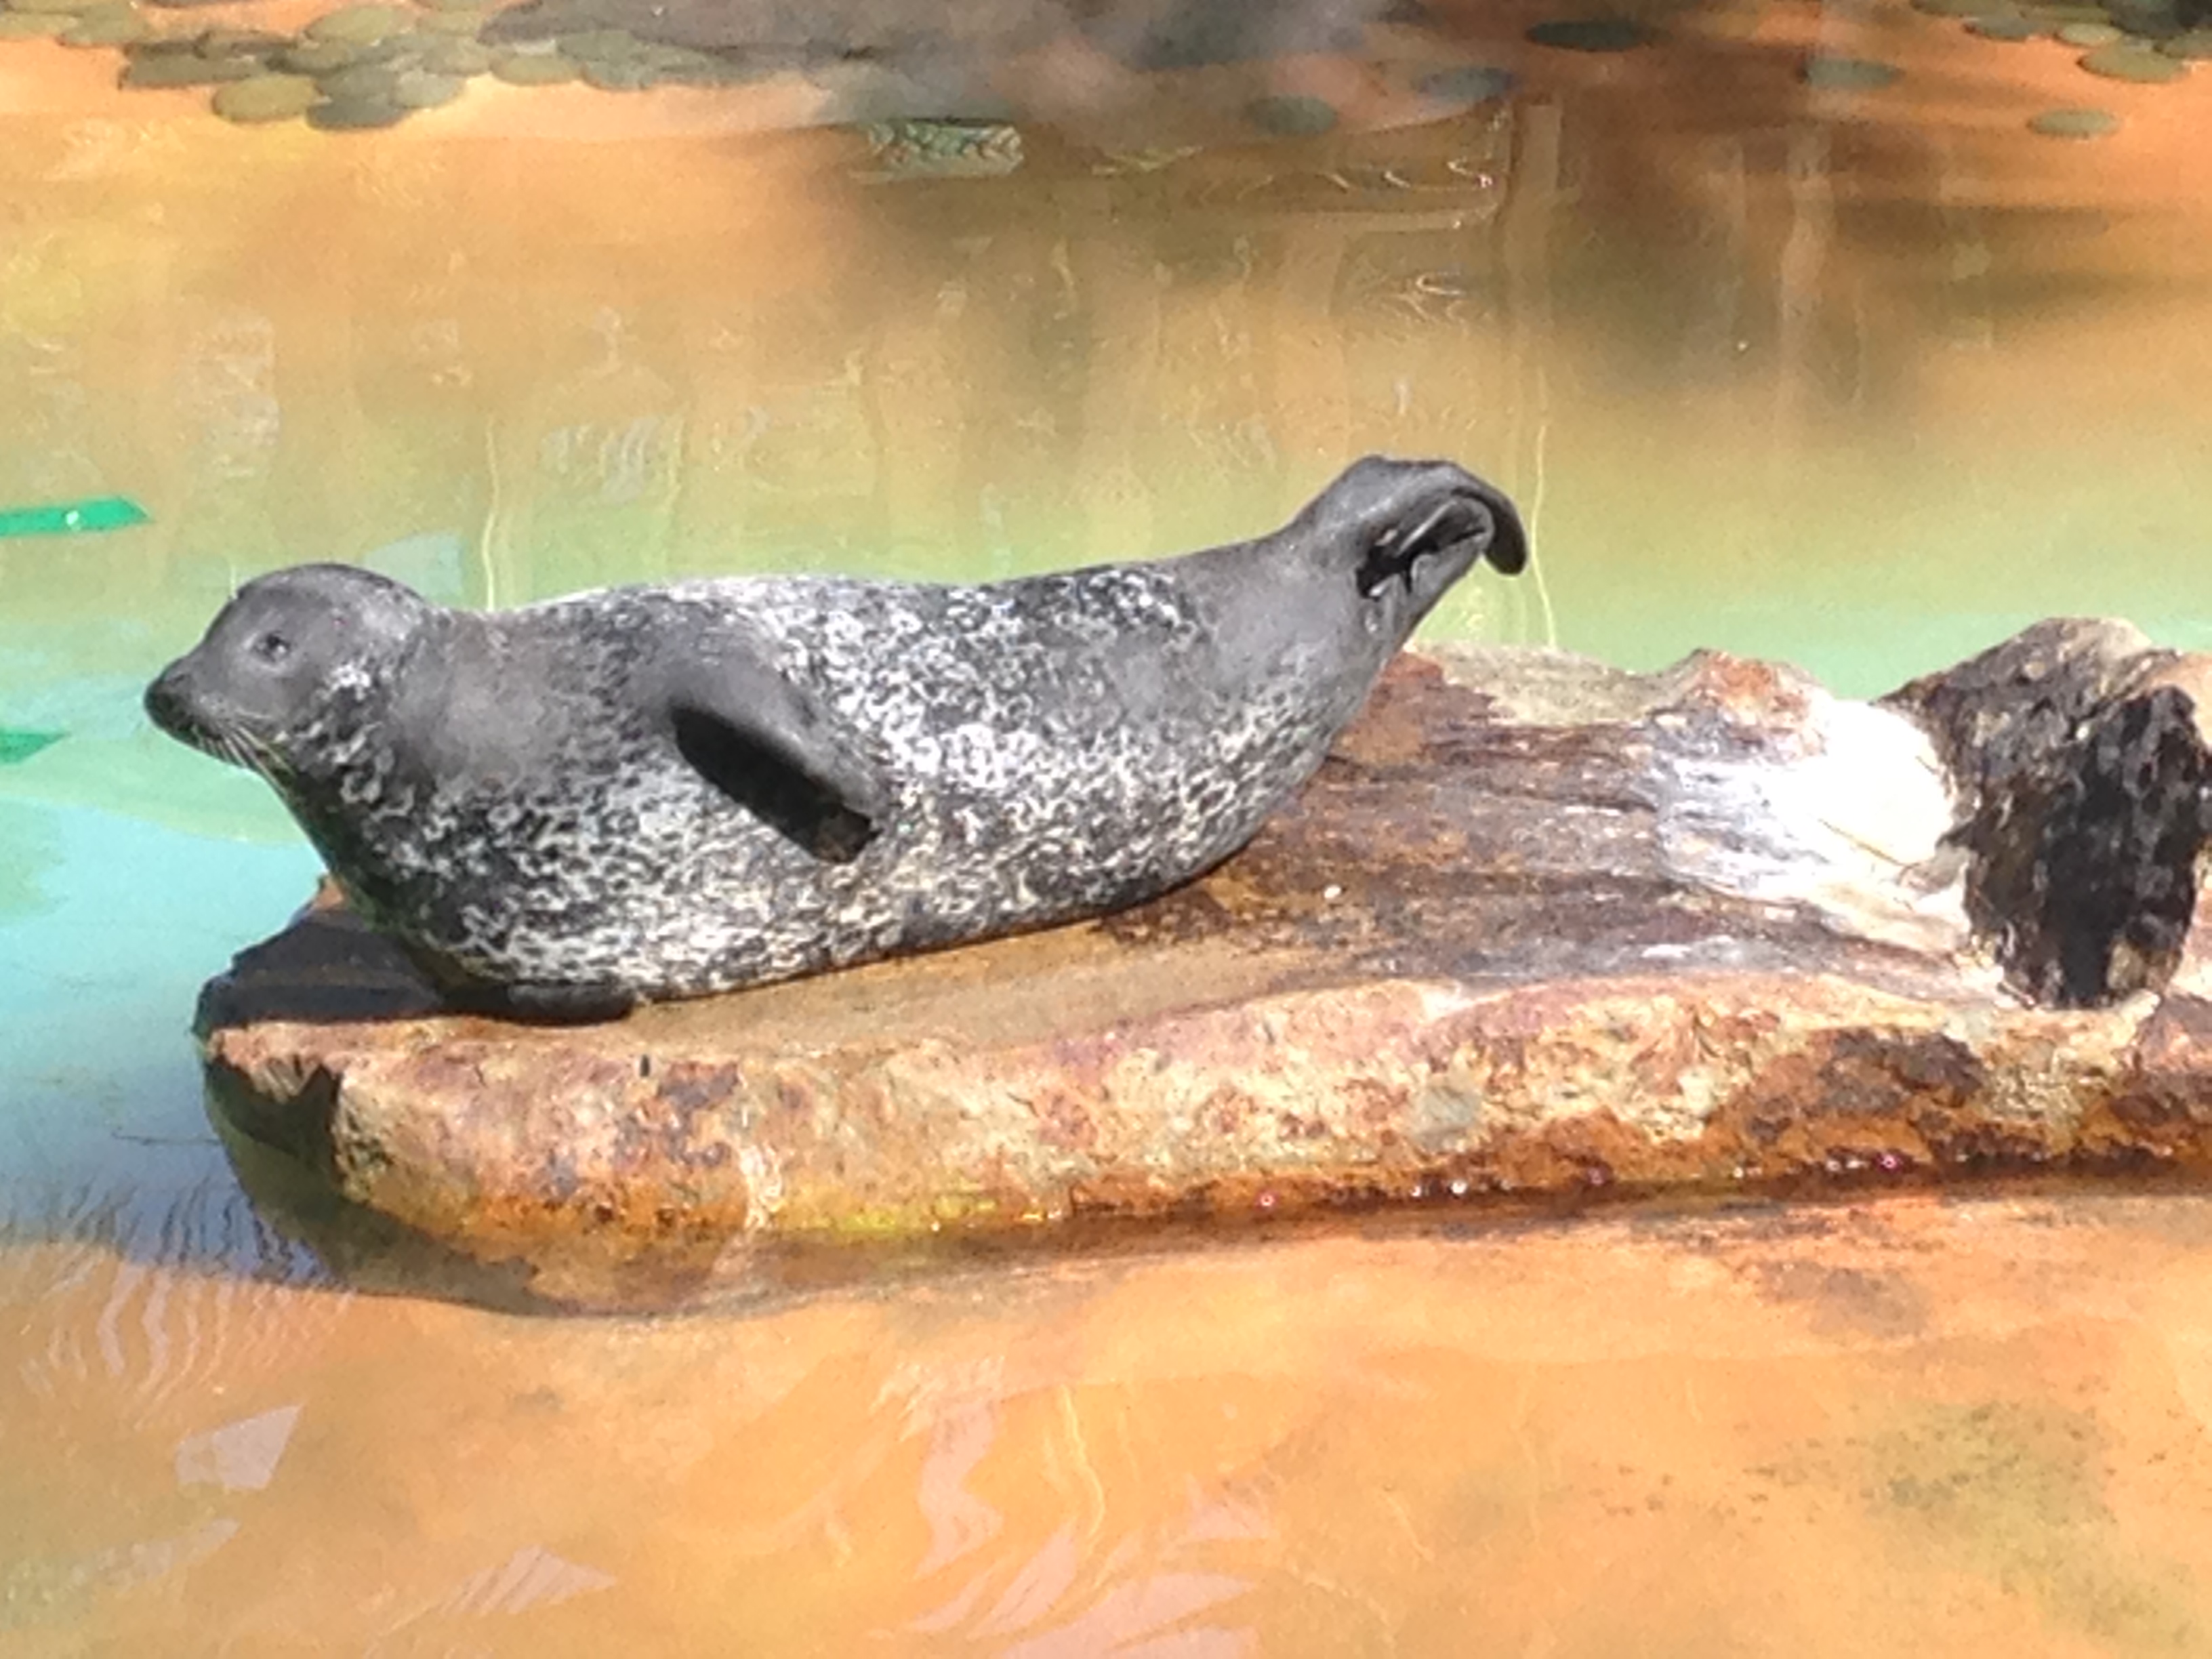 Gracie the seal basking in the sun at Bahia Resort